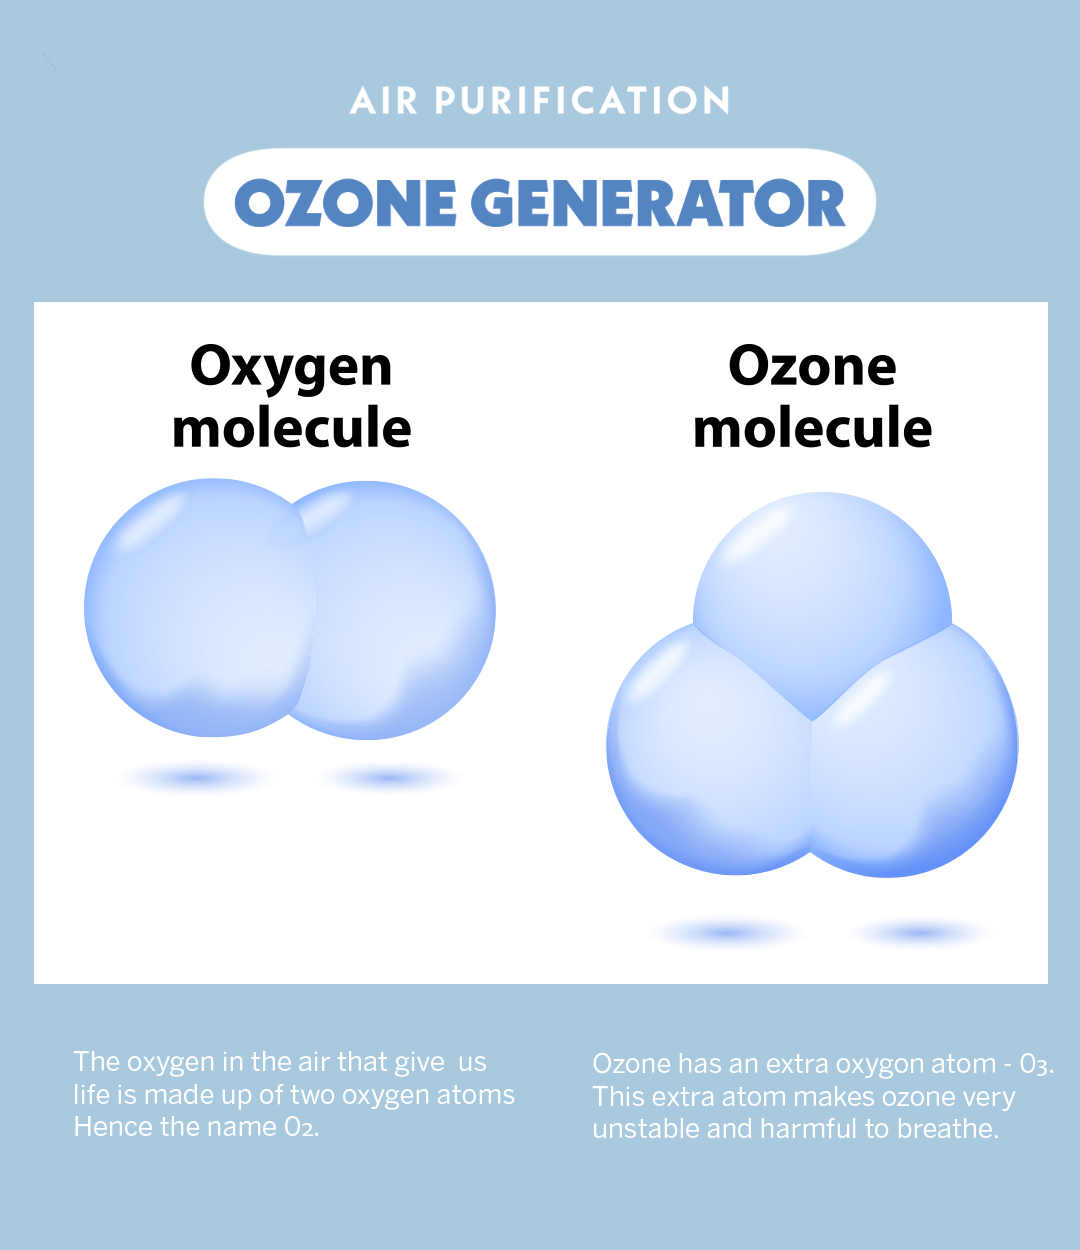 Ozone Generators Air Purification